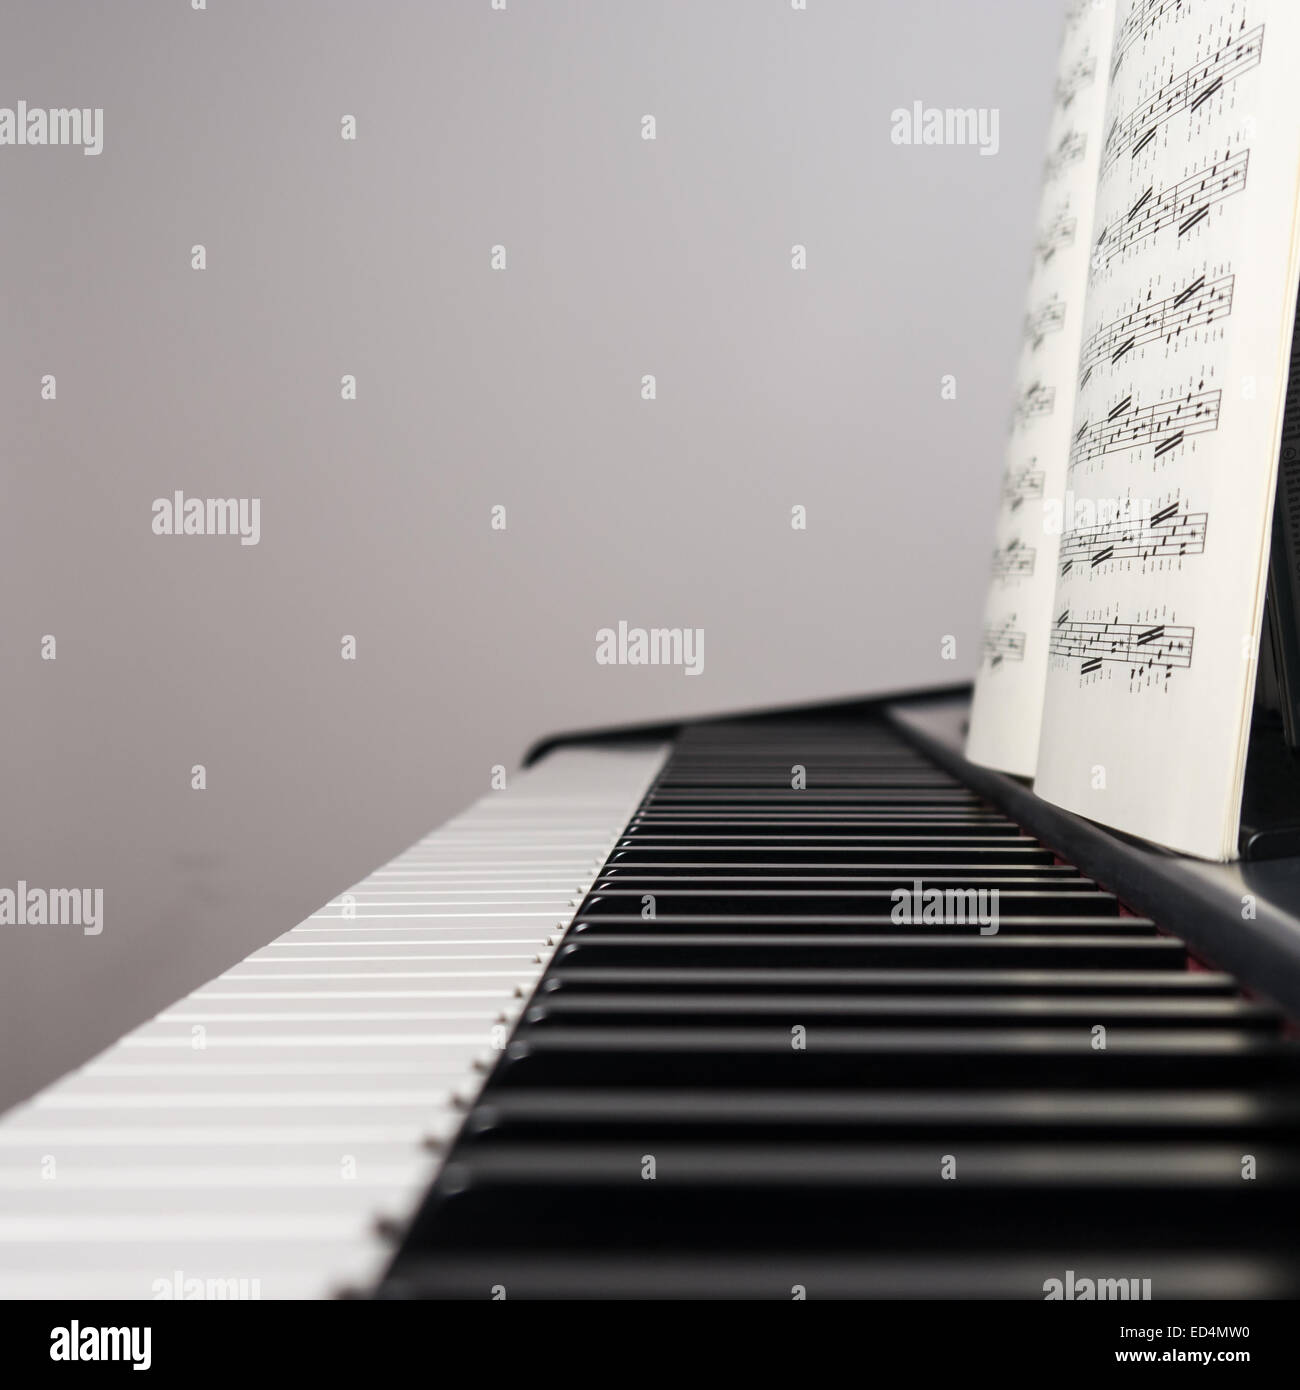 piano keys and music sheet Stock Photo